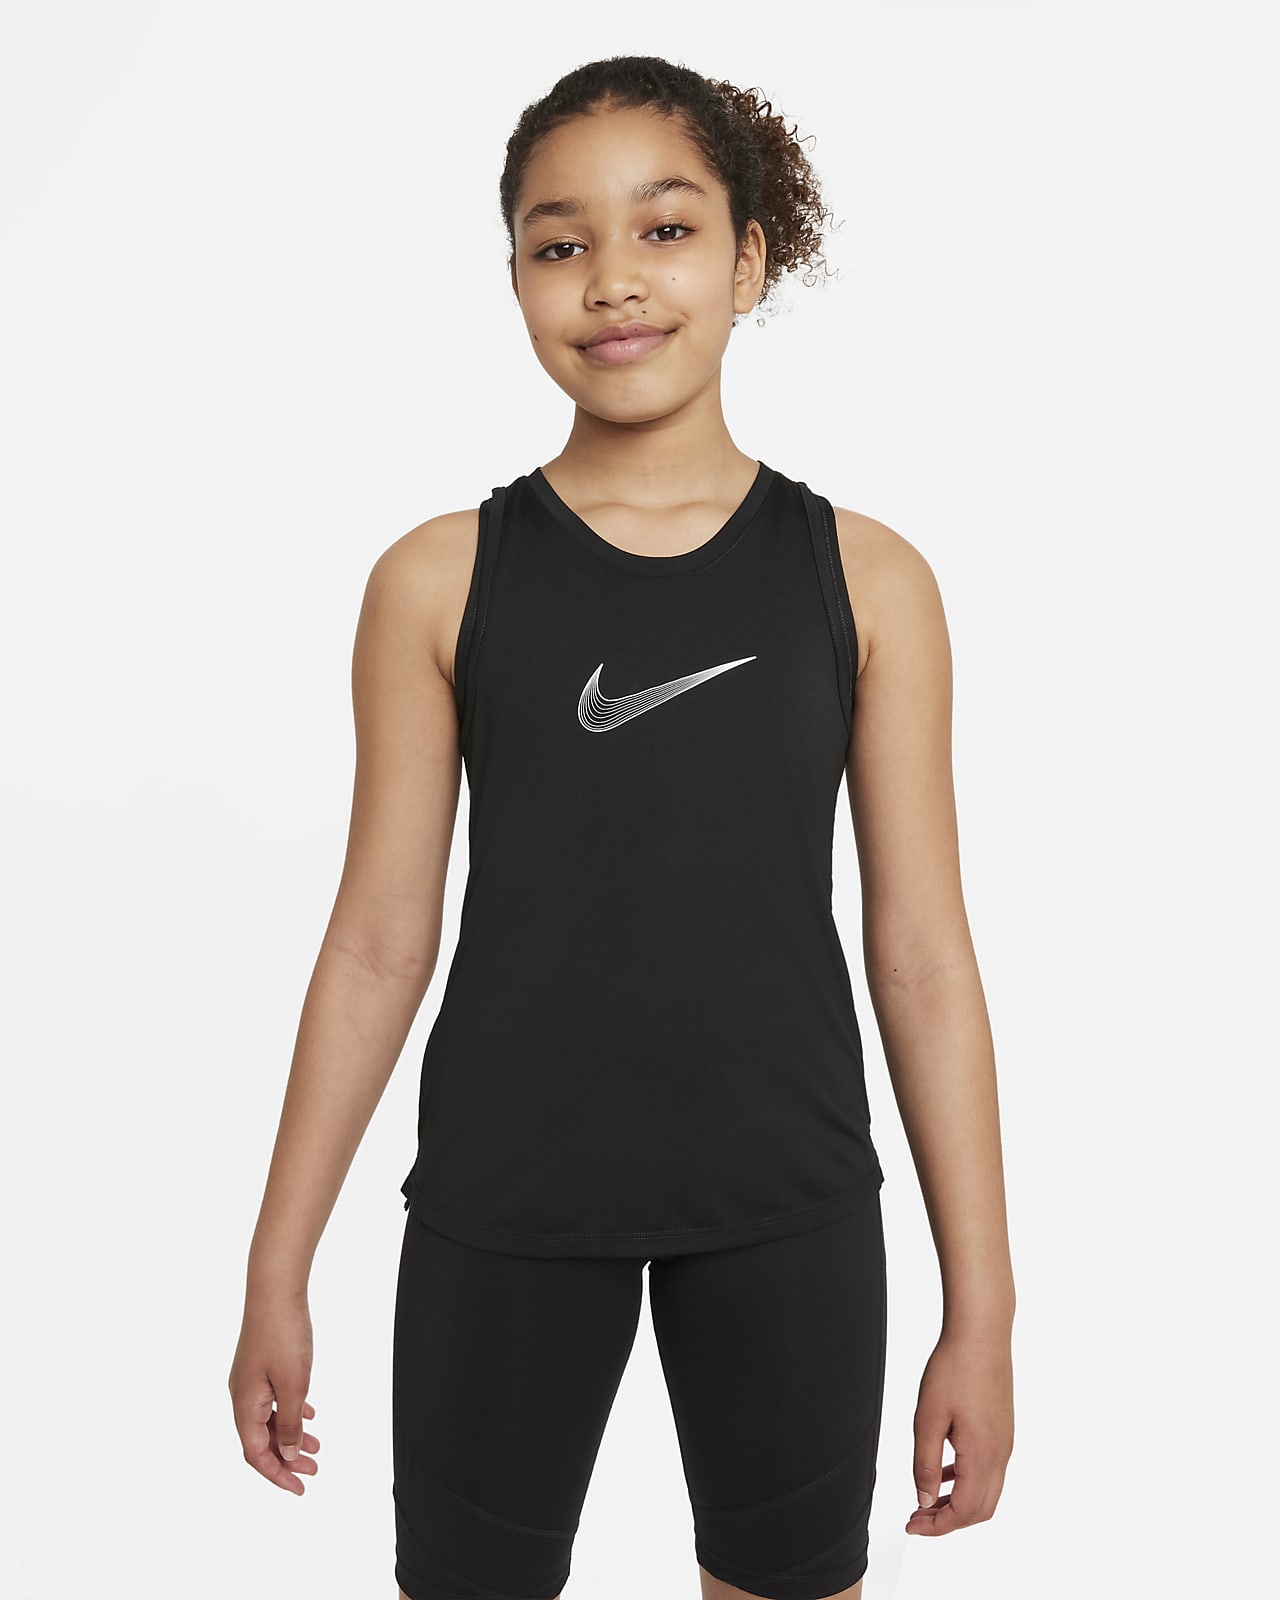 Träningslinne Nike Dri-FIT One för ungdom (tjejer)